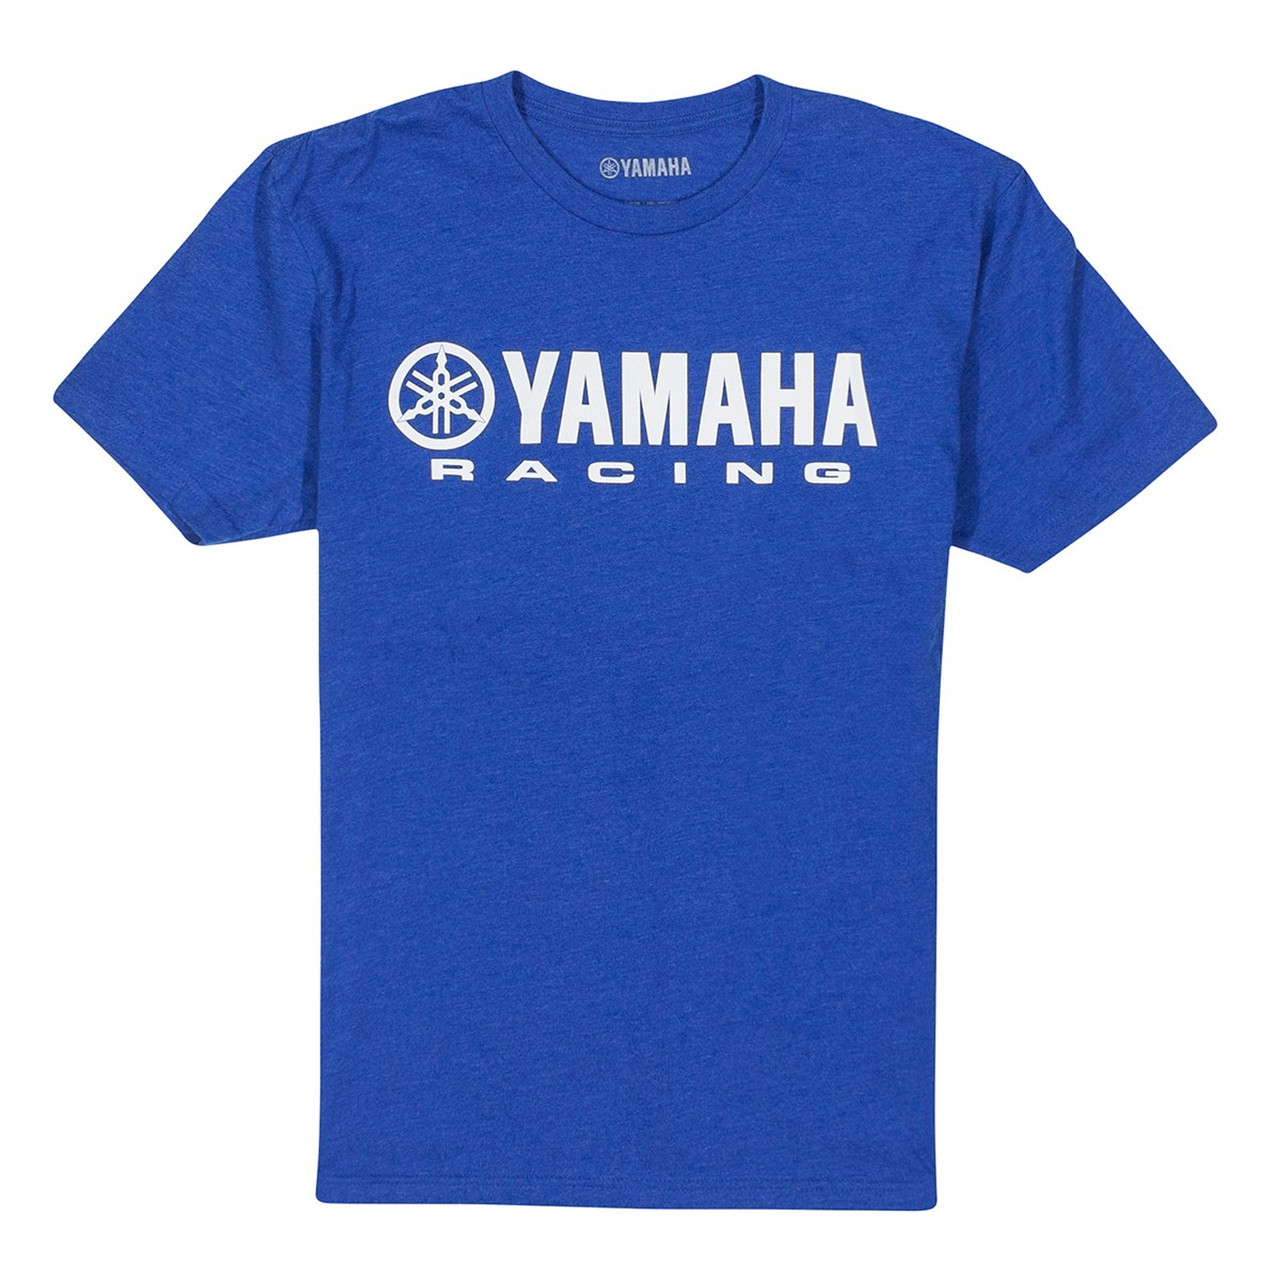 Yamaha New OEM, Branded Men's Racing Classic Short Sleeve Tee, VDF-19TYR-BL-MD